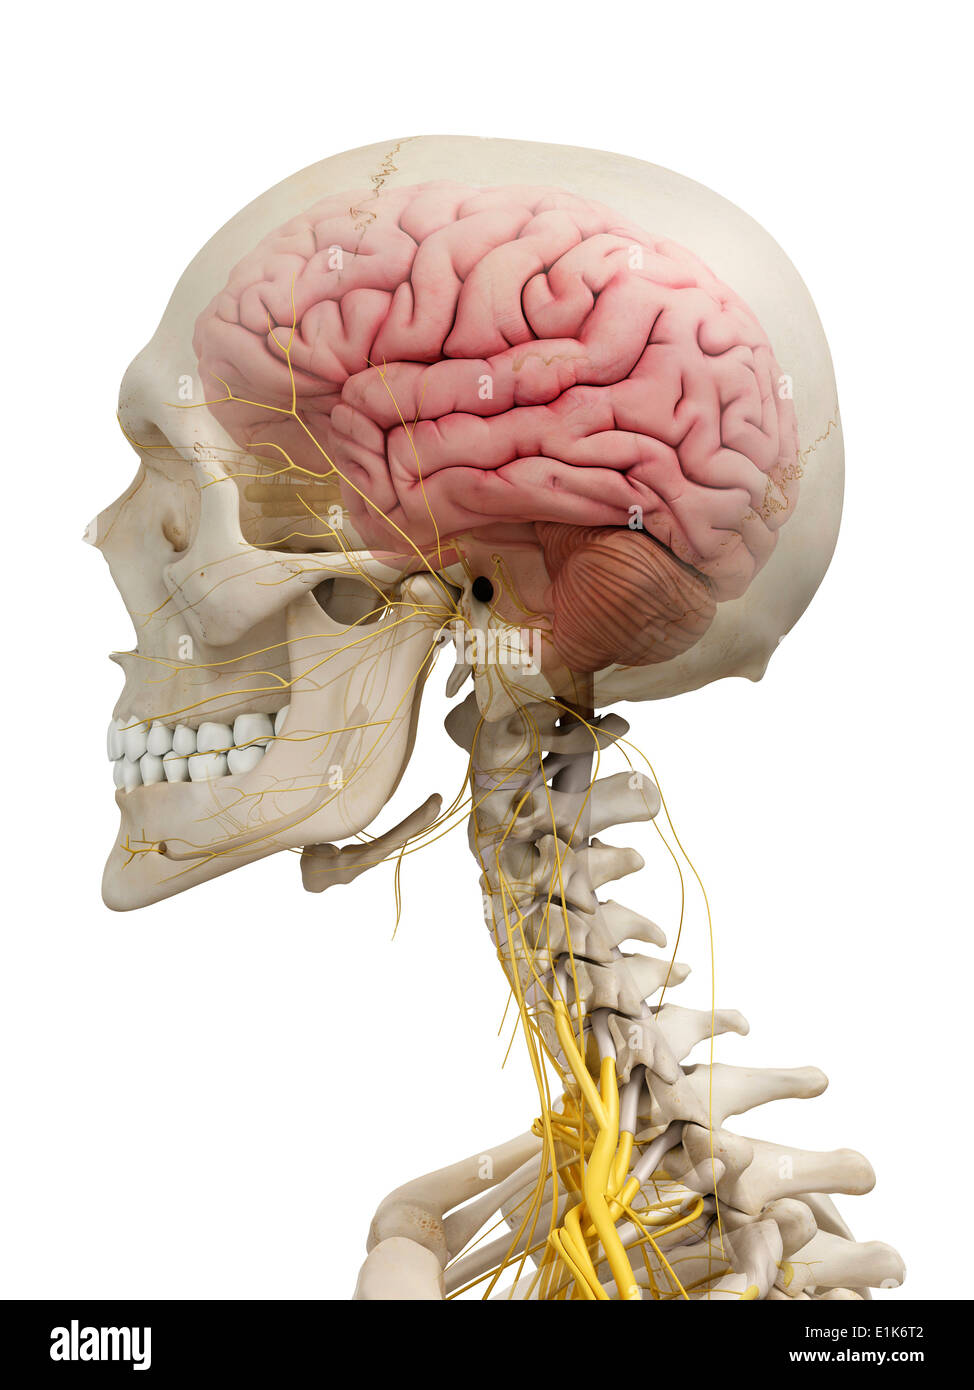 Human Skeleton and Brain, artwork Stock Photo - Alamy